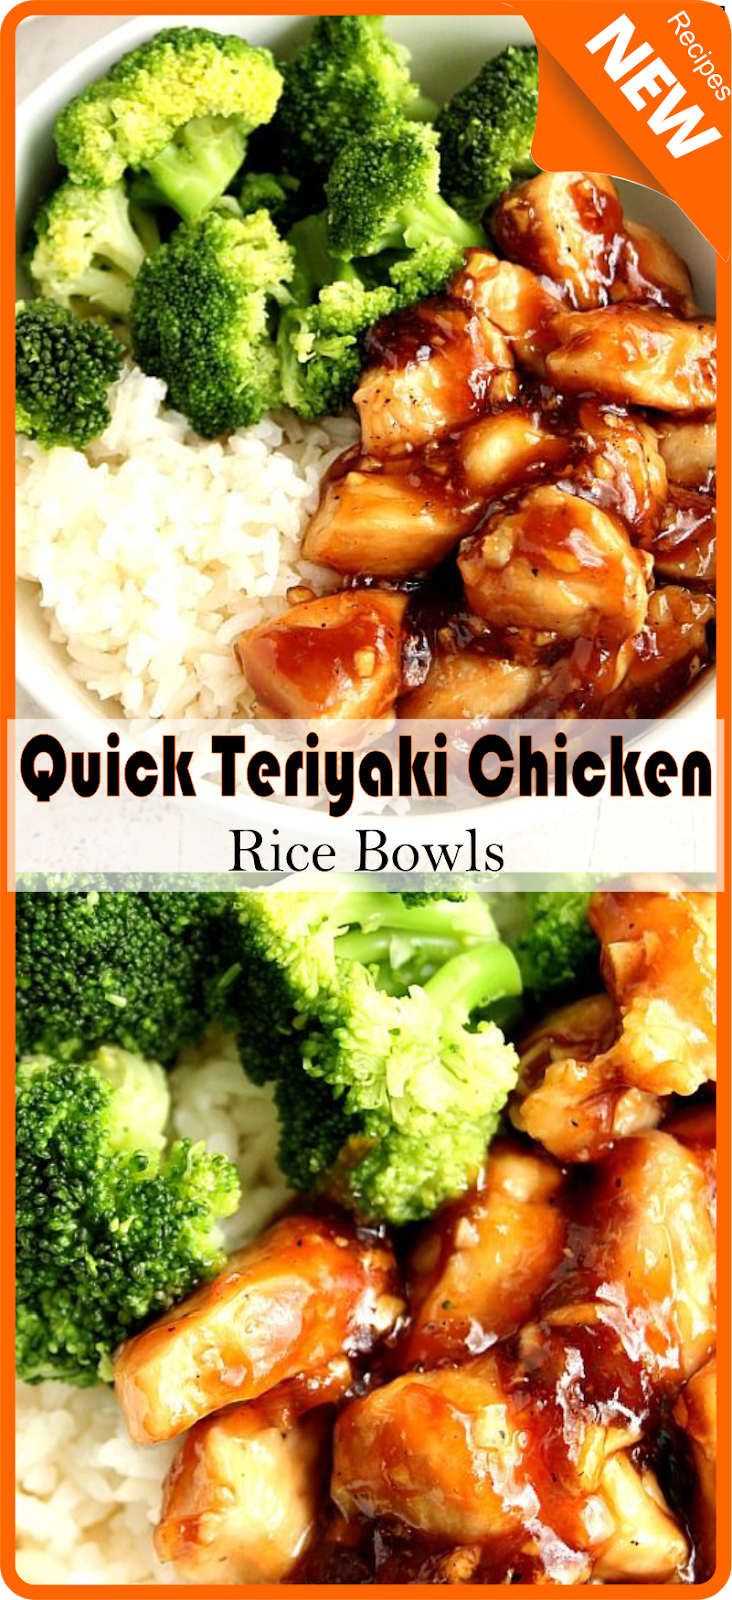 Quick Teriyaki Chicken Rice Bowls | Think food